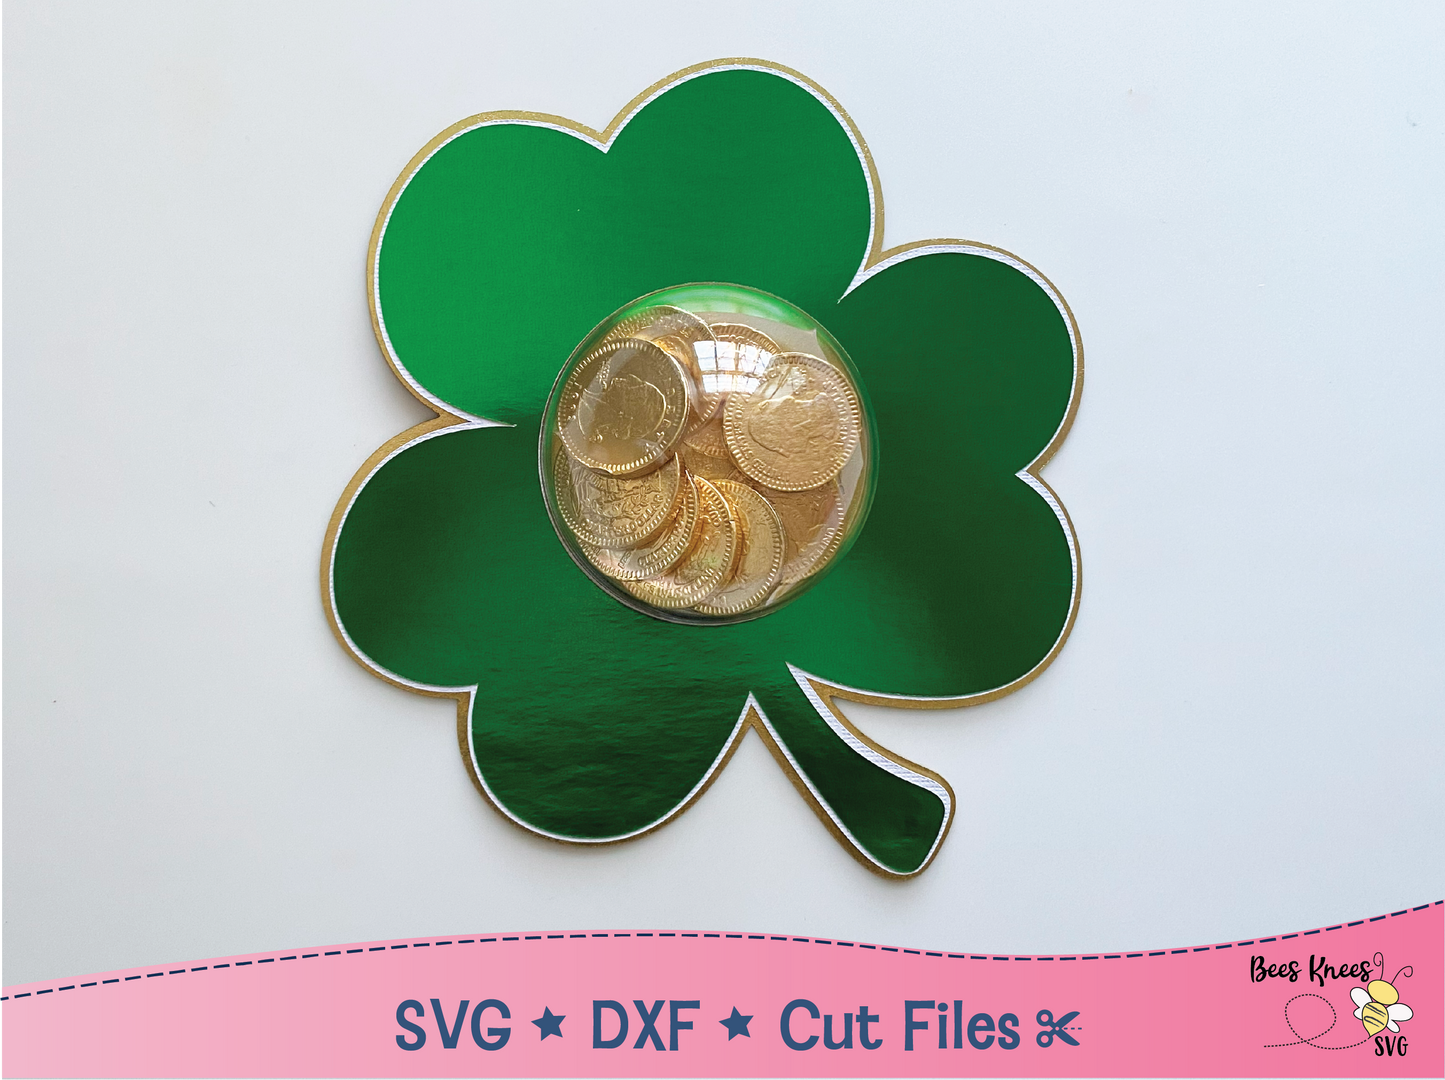 St. Patrick's Day Bundle  Dome Candy Holder SVG Templates